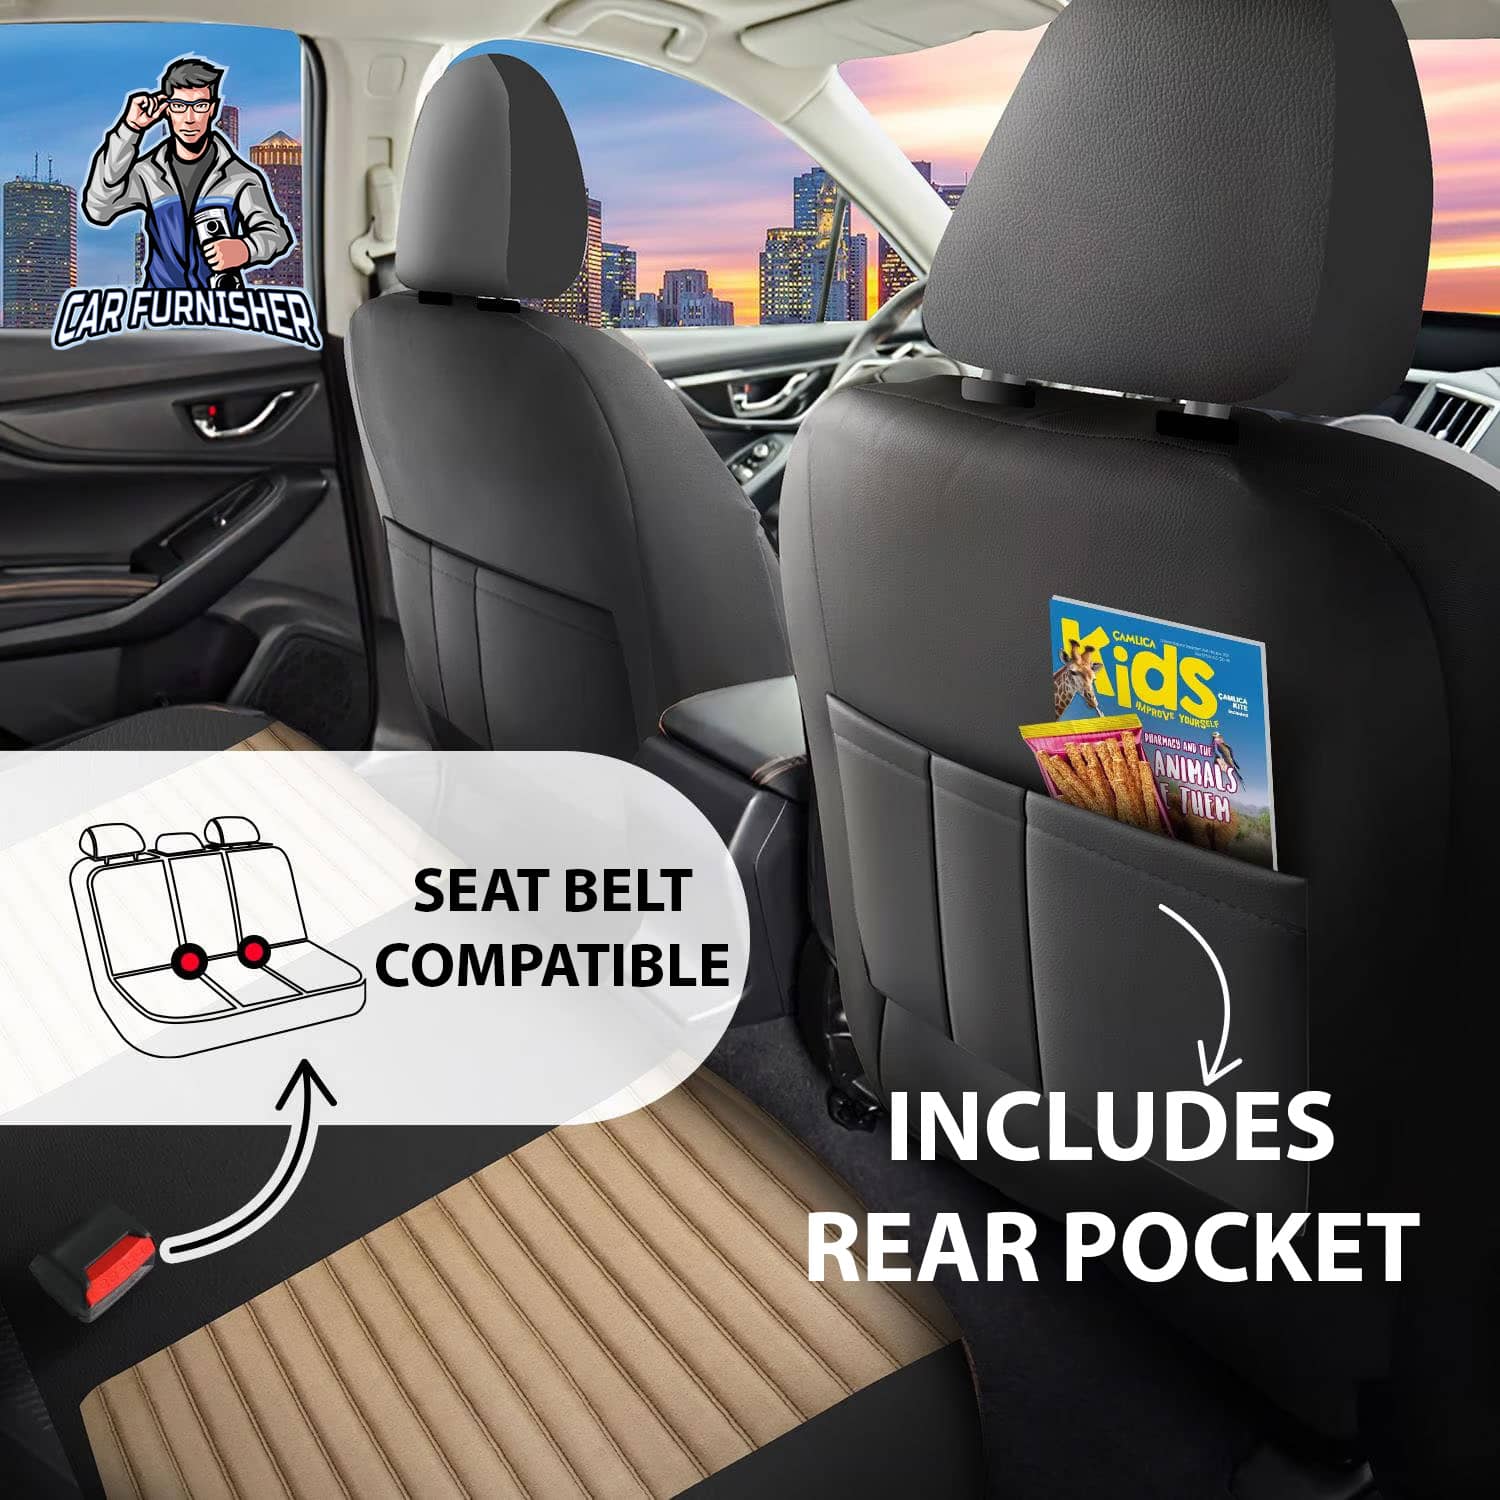 Car Seat Cover Set - Boston Velour Fabric Design Beige 5 Seats + Headrests (Full Set) Leather & Velour Fabric